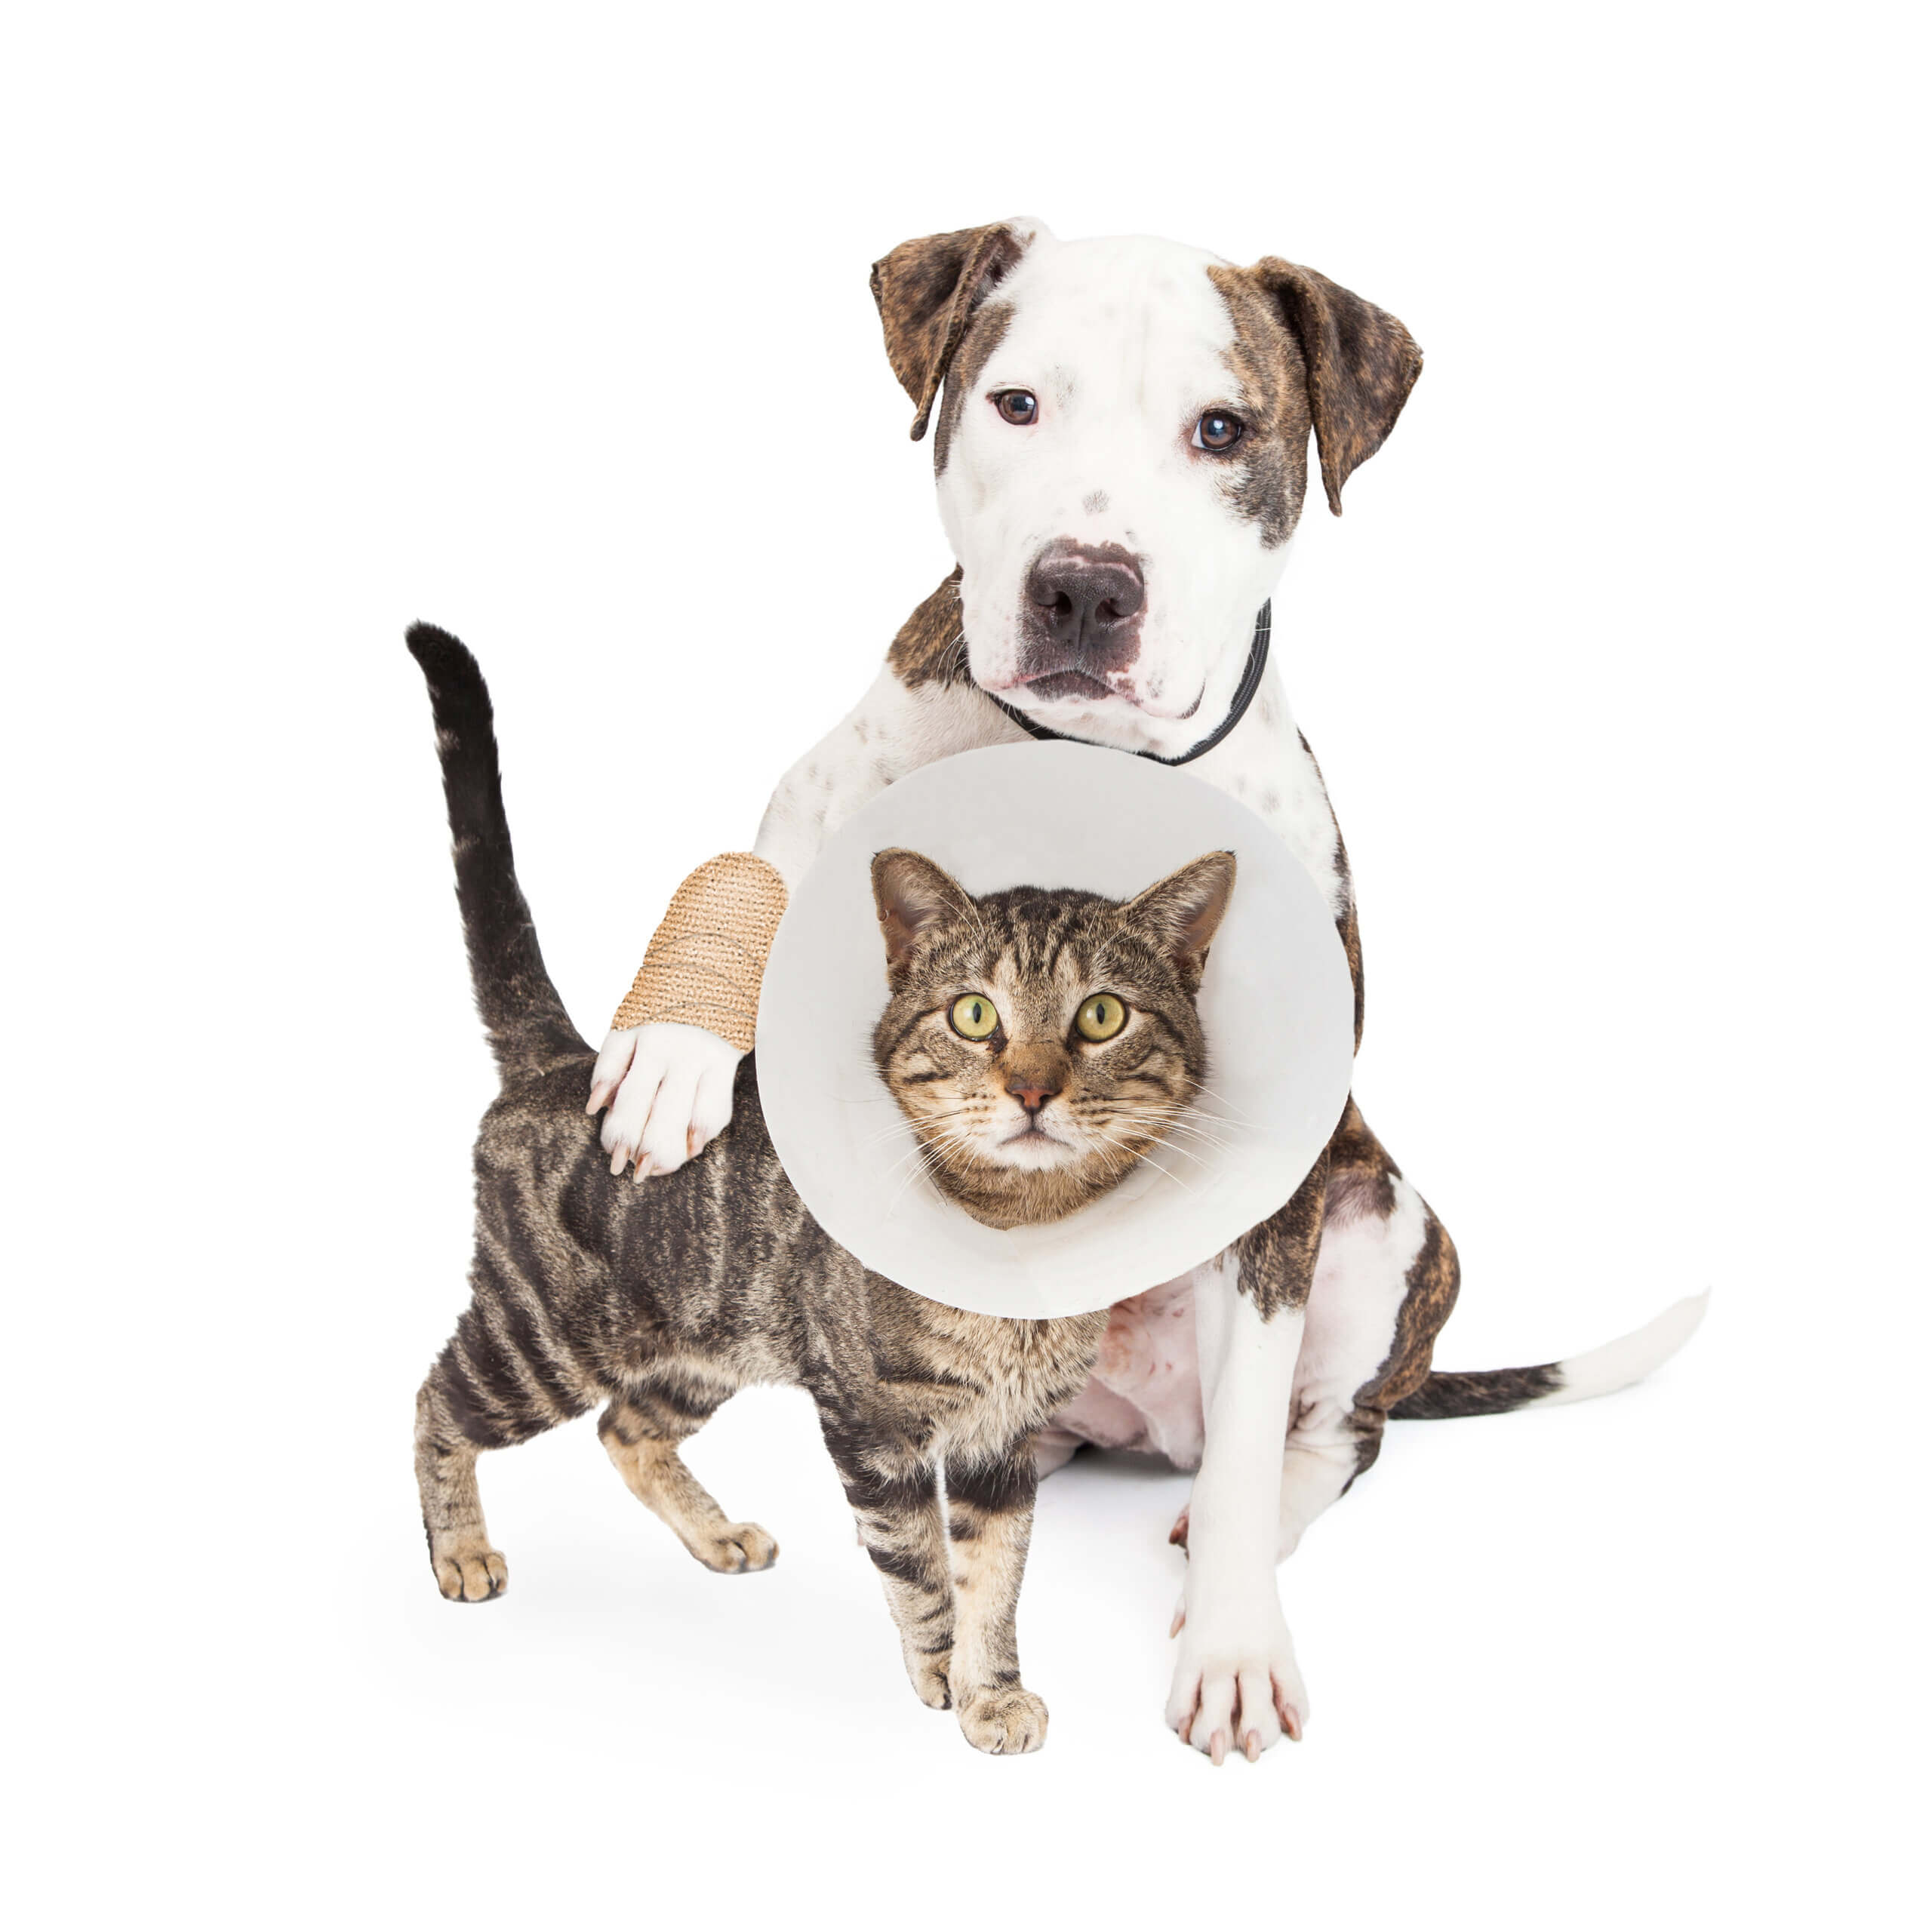 Injured-dog-and-cat